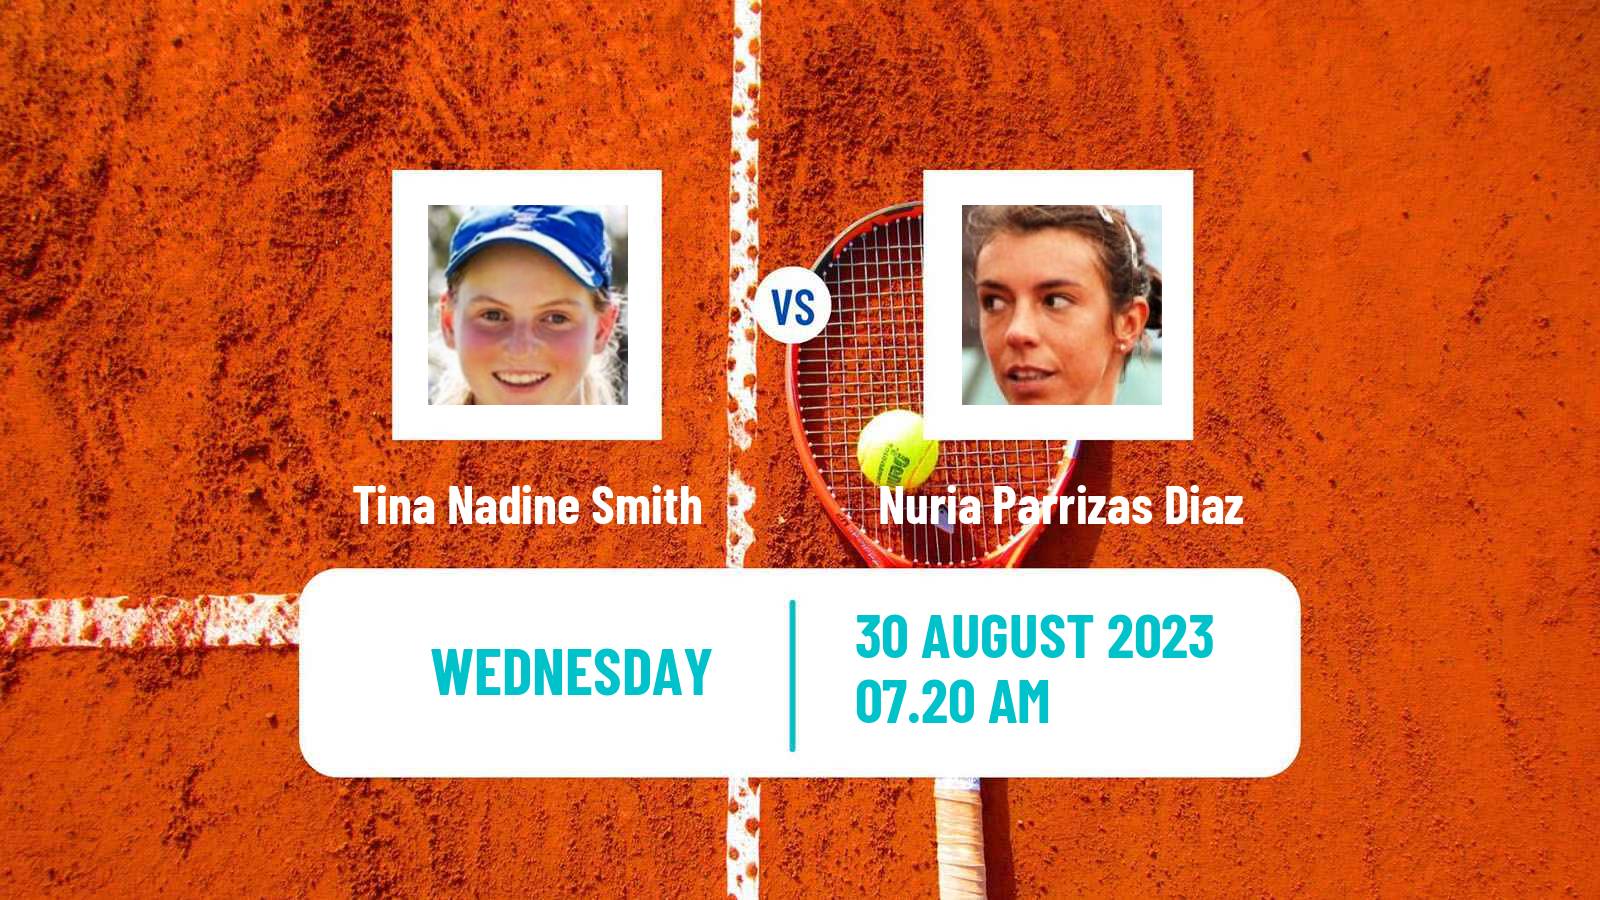 Tennis ITF W60 Collonge Bellerive Women Tina Nadine Smith - Nuria Parrizas Diaz